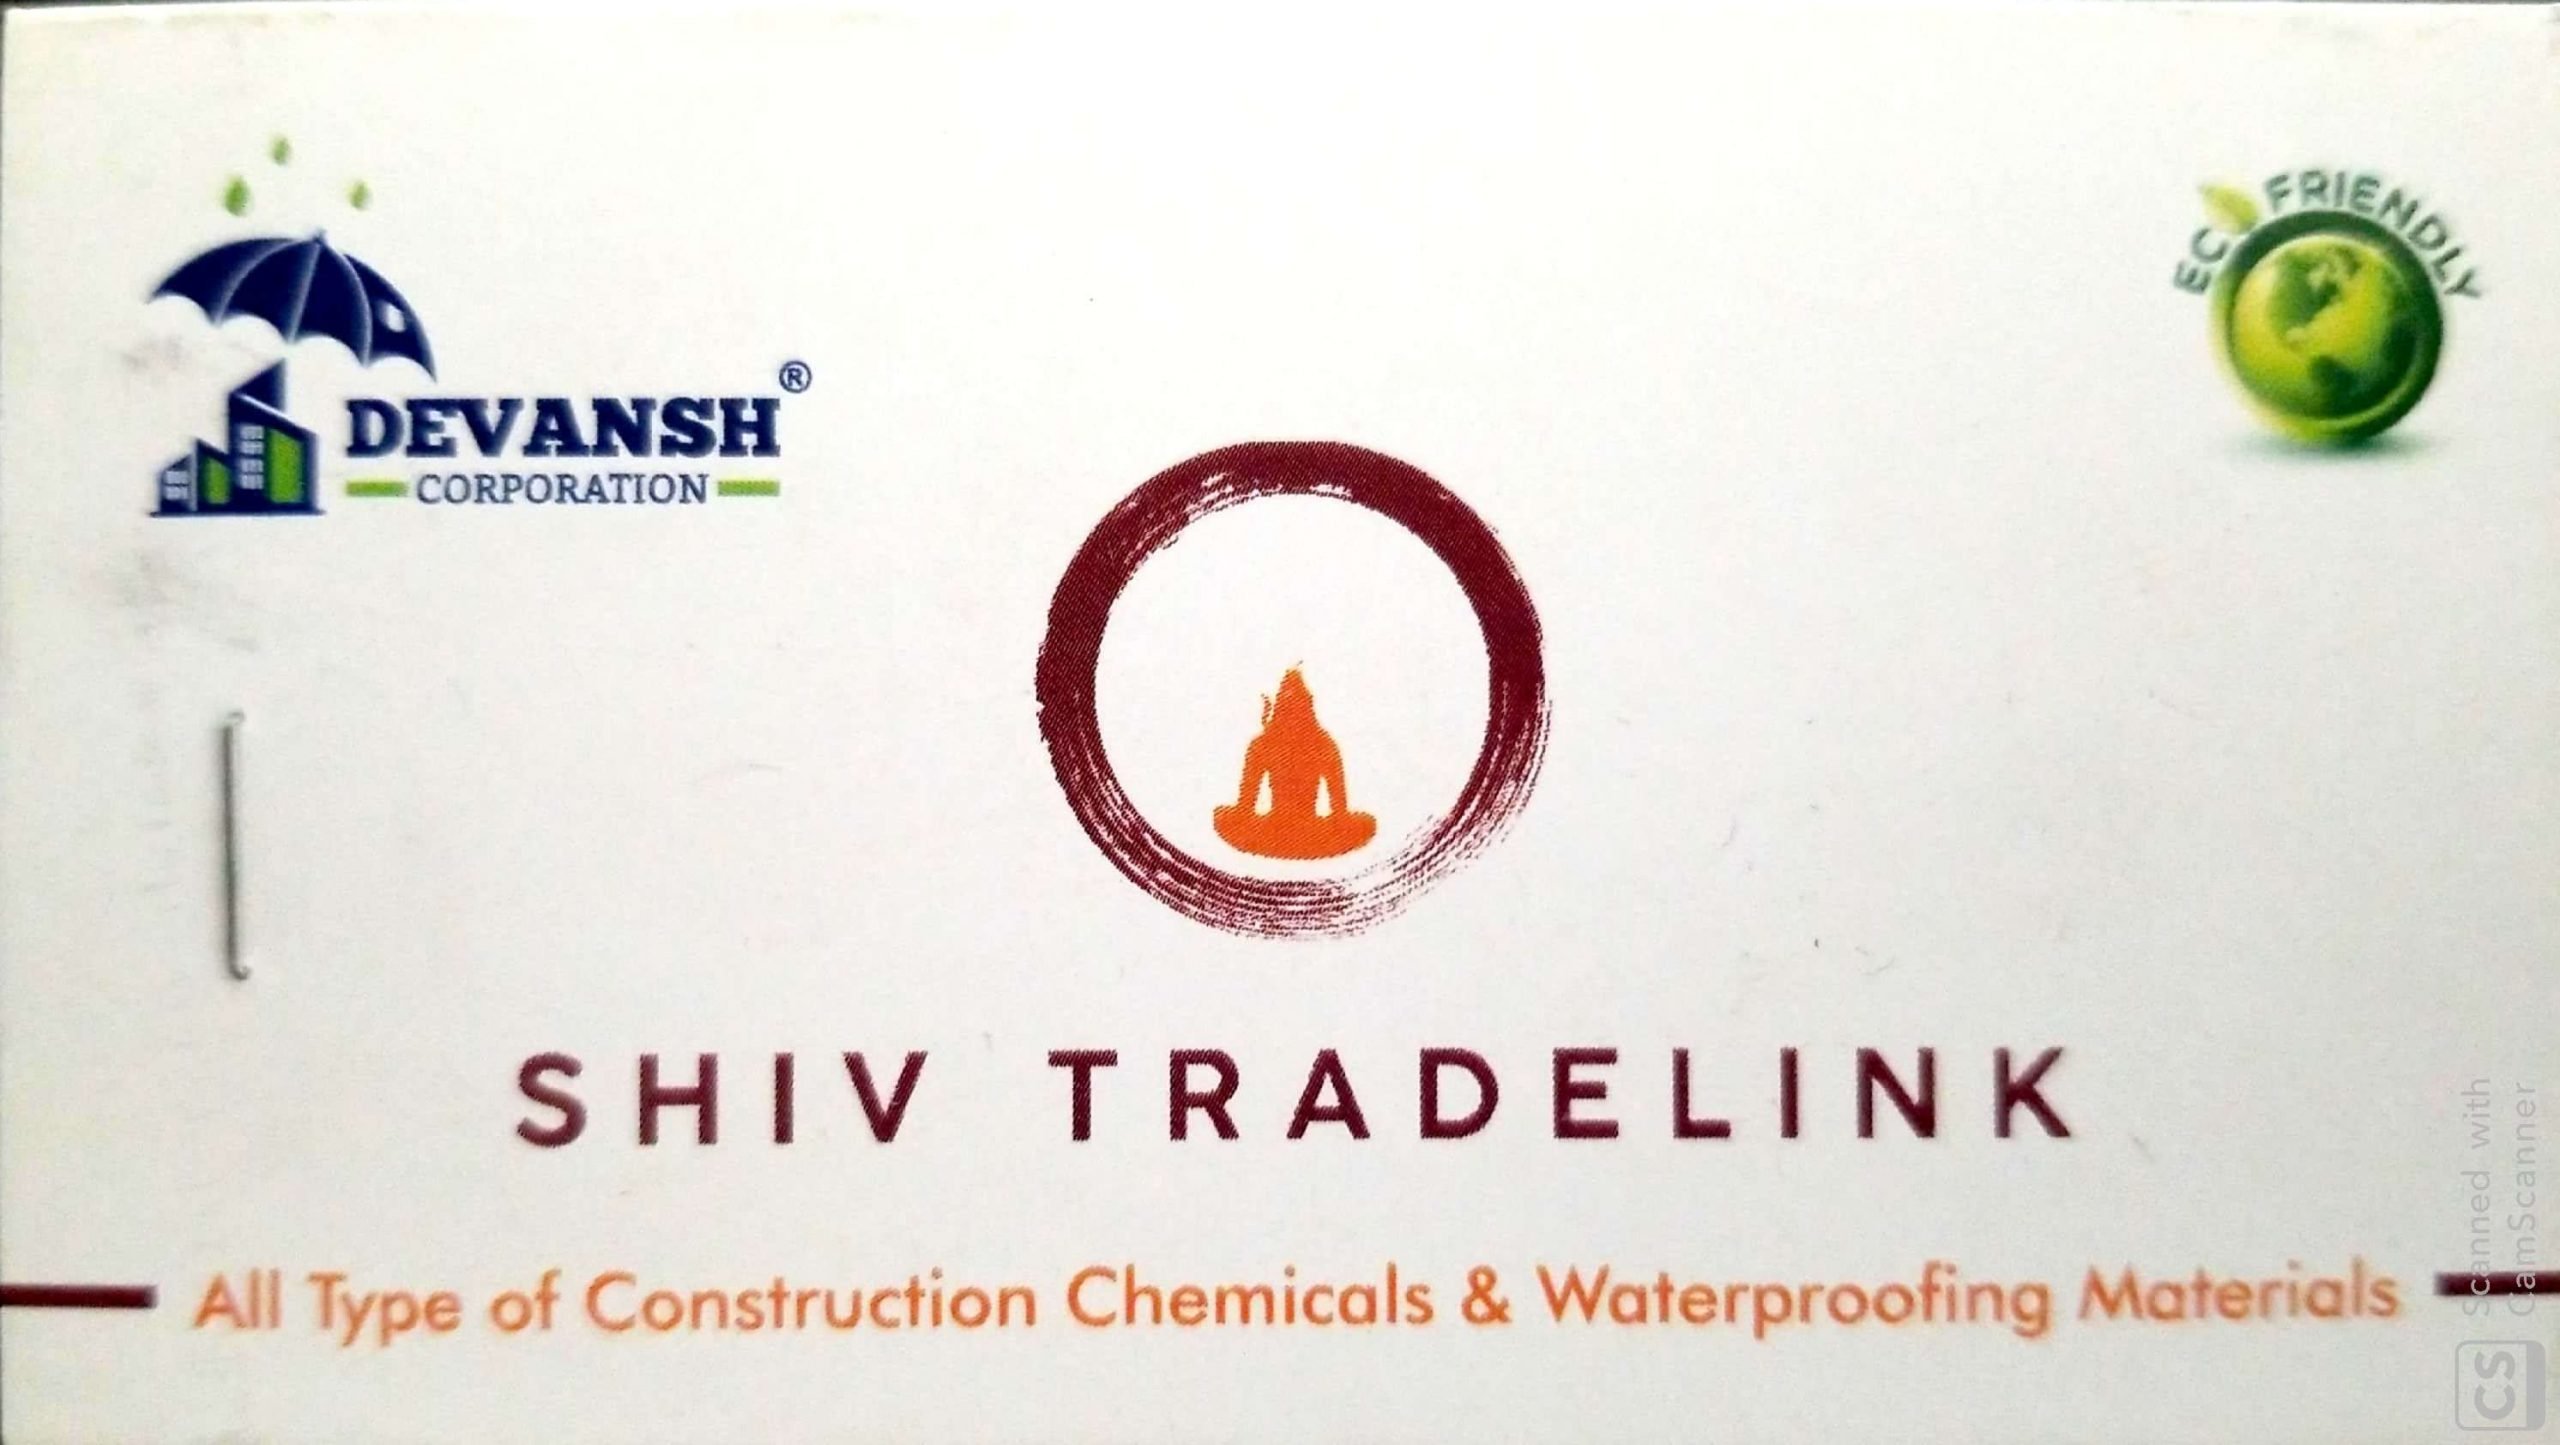 Shiv Tradelink